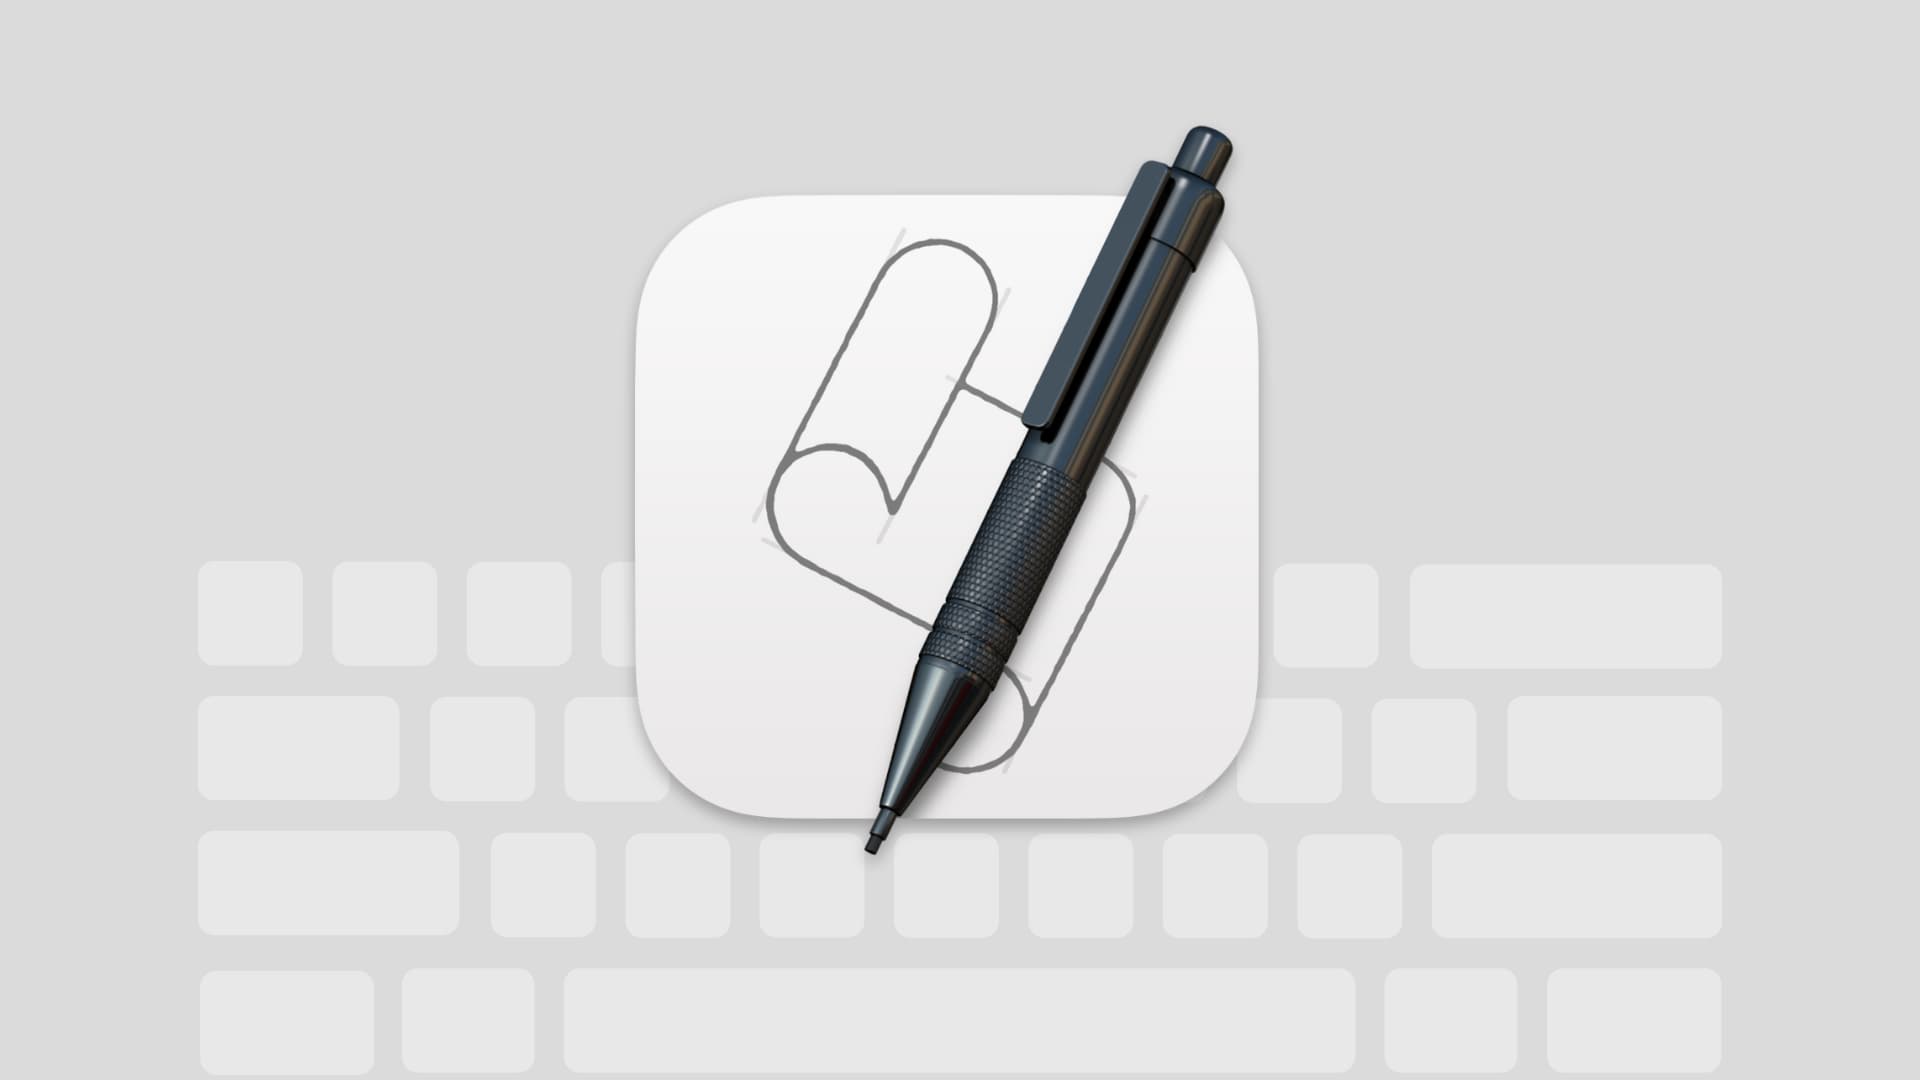 Keyboard shortcuts for the Script Editor app on Mac